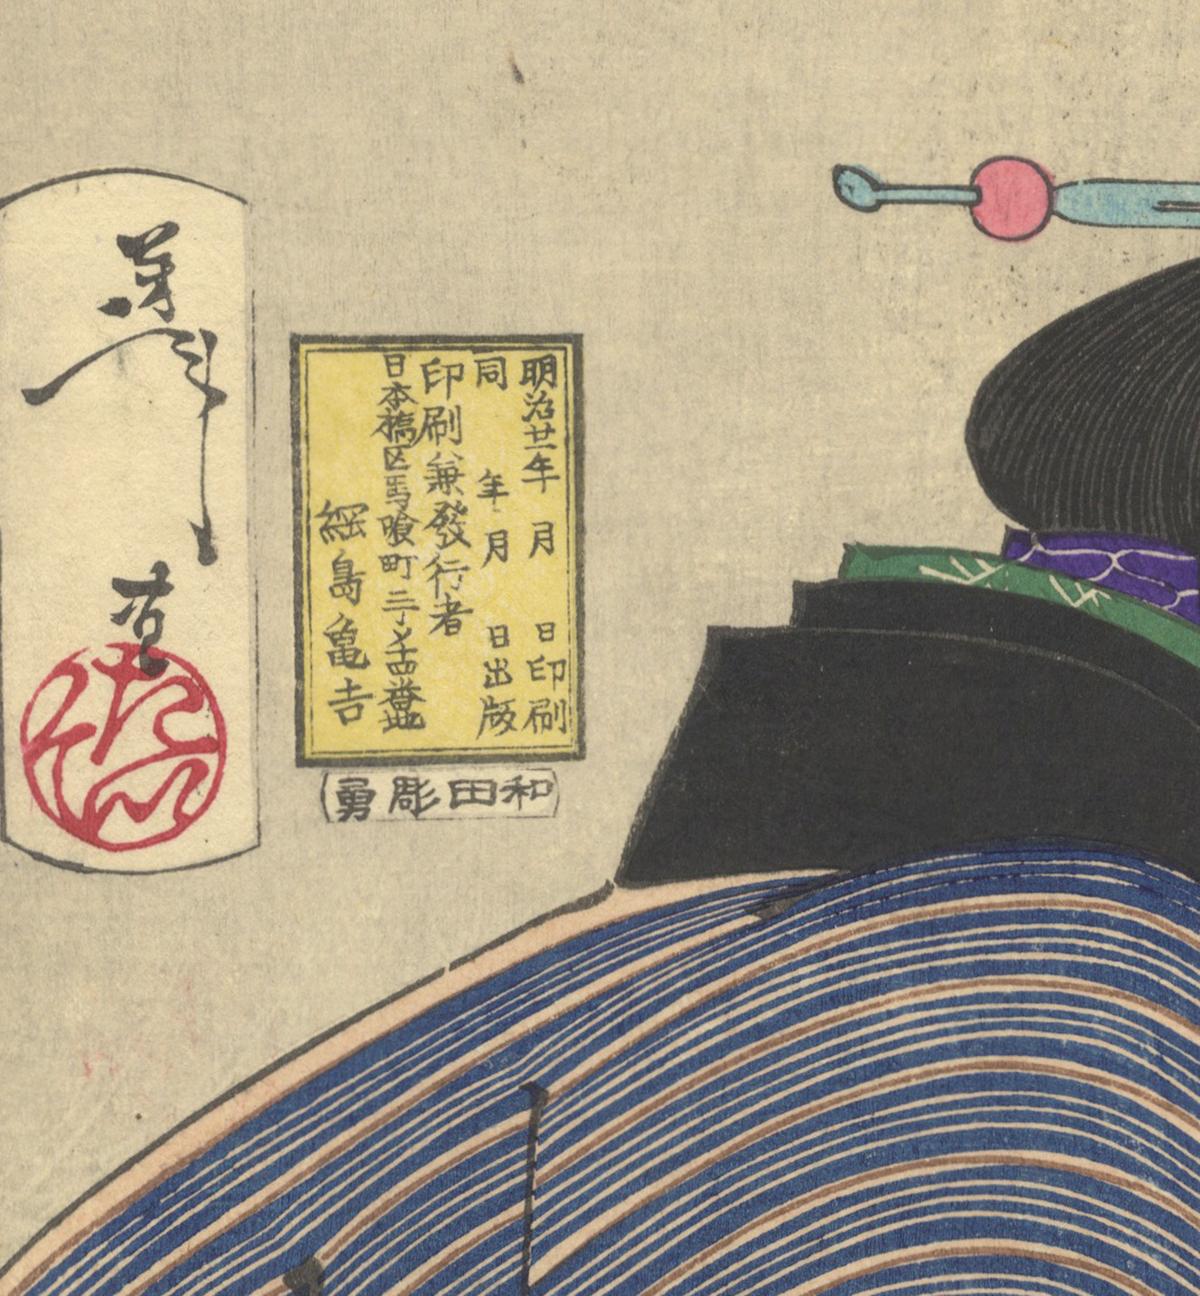 Artist: Yoshitoshi Tsukioka (1839-1892)
Title: 'Kaitasou' A woman of the Kaei era (1848-1854) eager shopping
Series: Fuzoku Sanjuniso (Thirty-two Aspects of Customs and Manners)
Publisher: Tsunashima Kamekichi
Date: 1888
Dimensions: 23.9 x 35.5